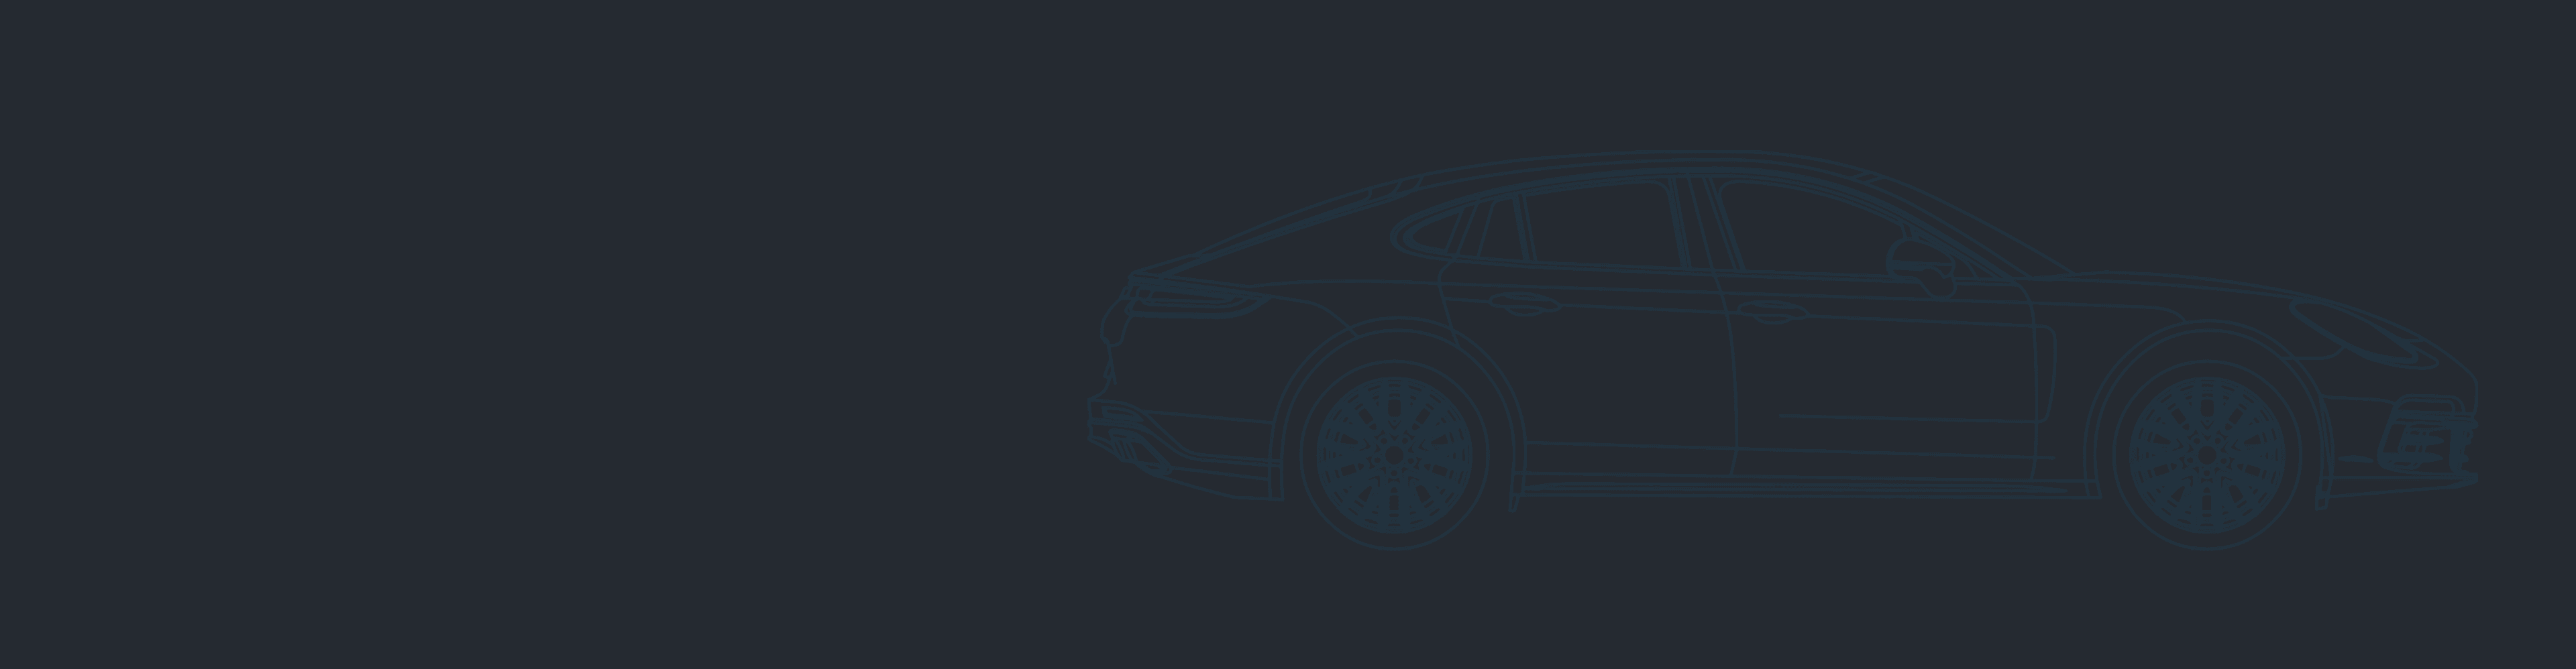 IoT automotive app development highlights